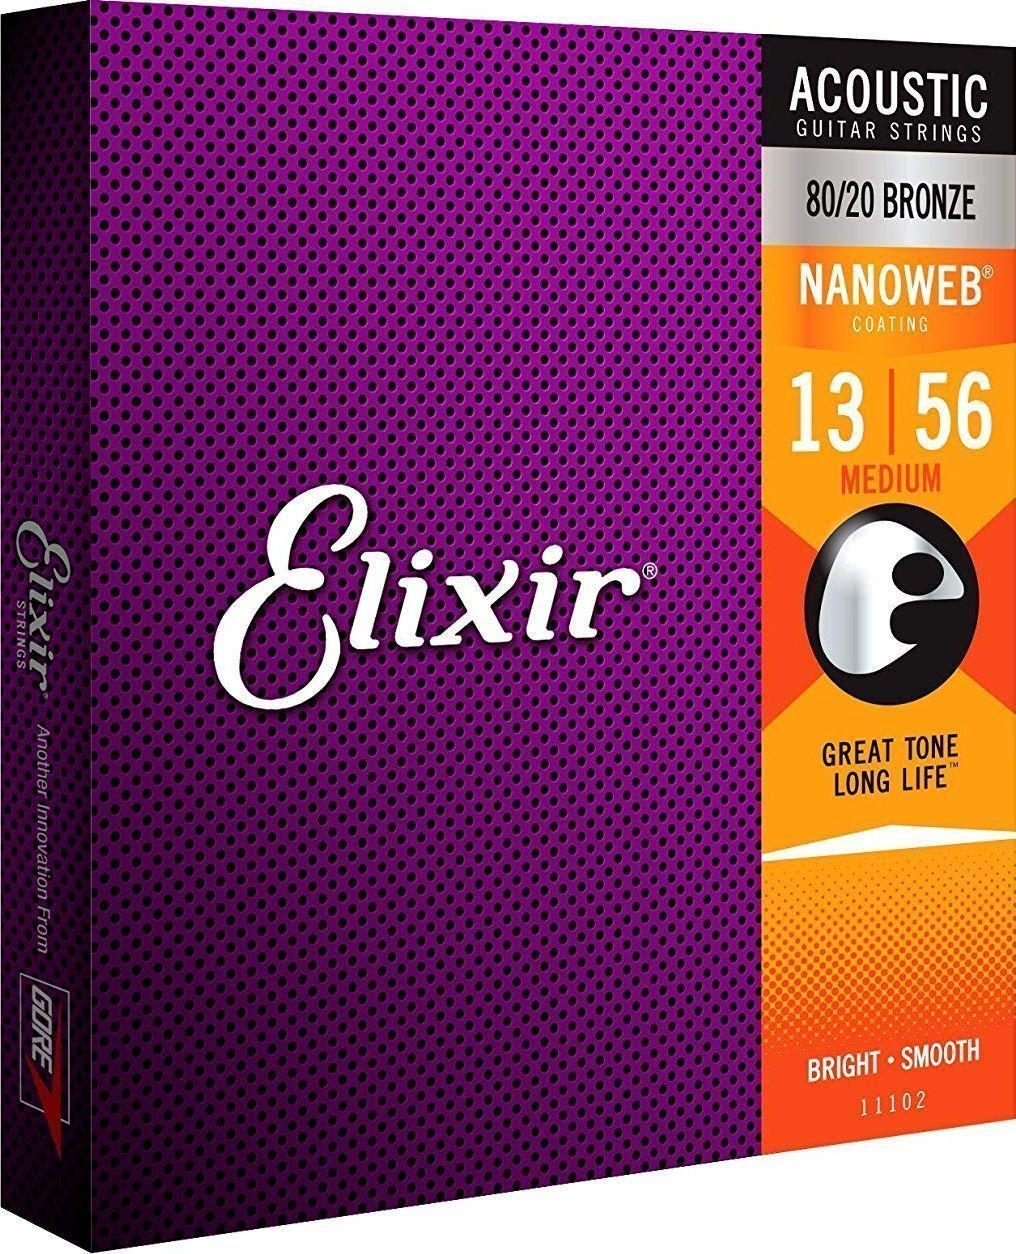 Guitar strings Elixir 11102 Nanoweb 13-56